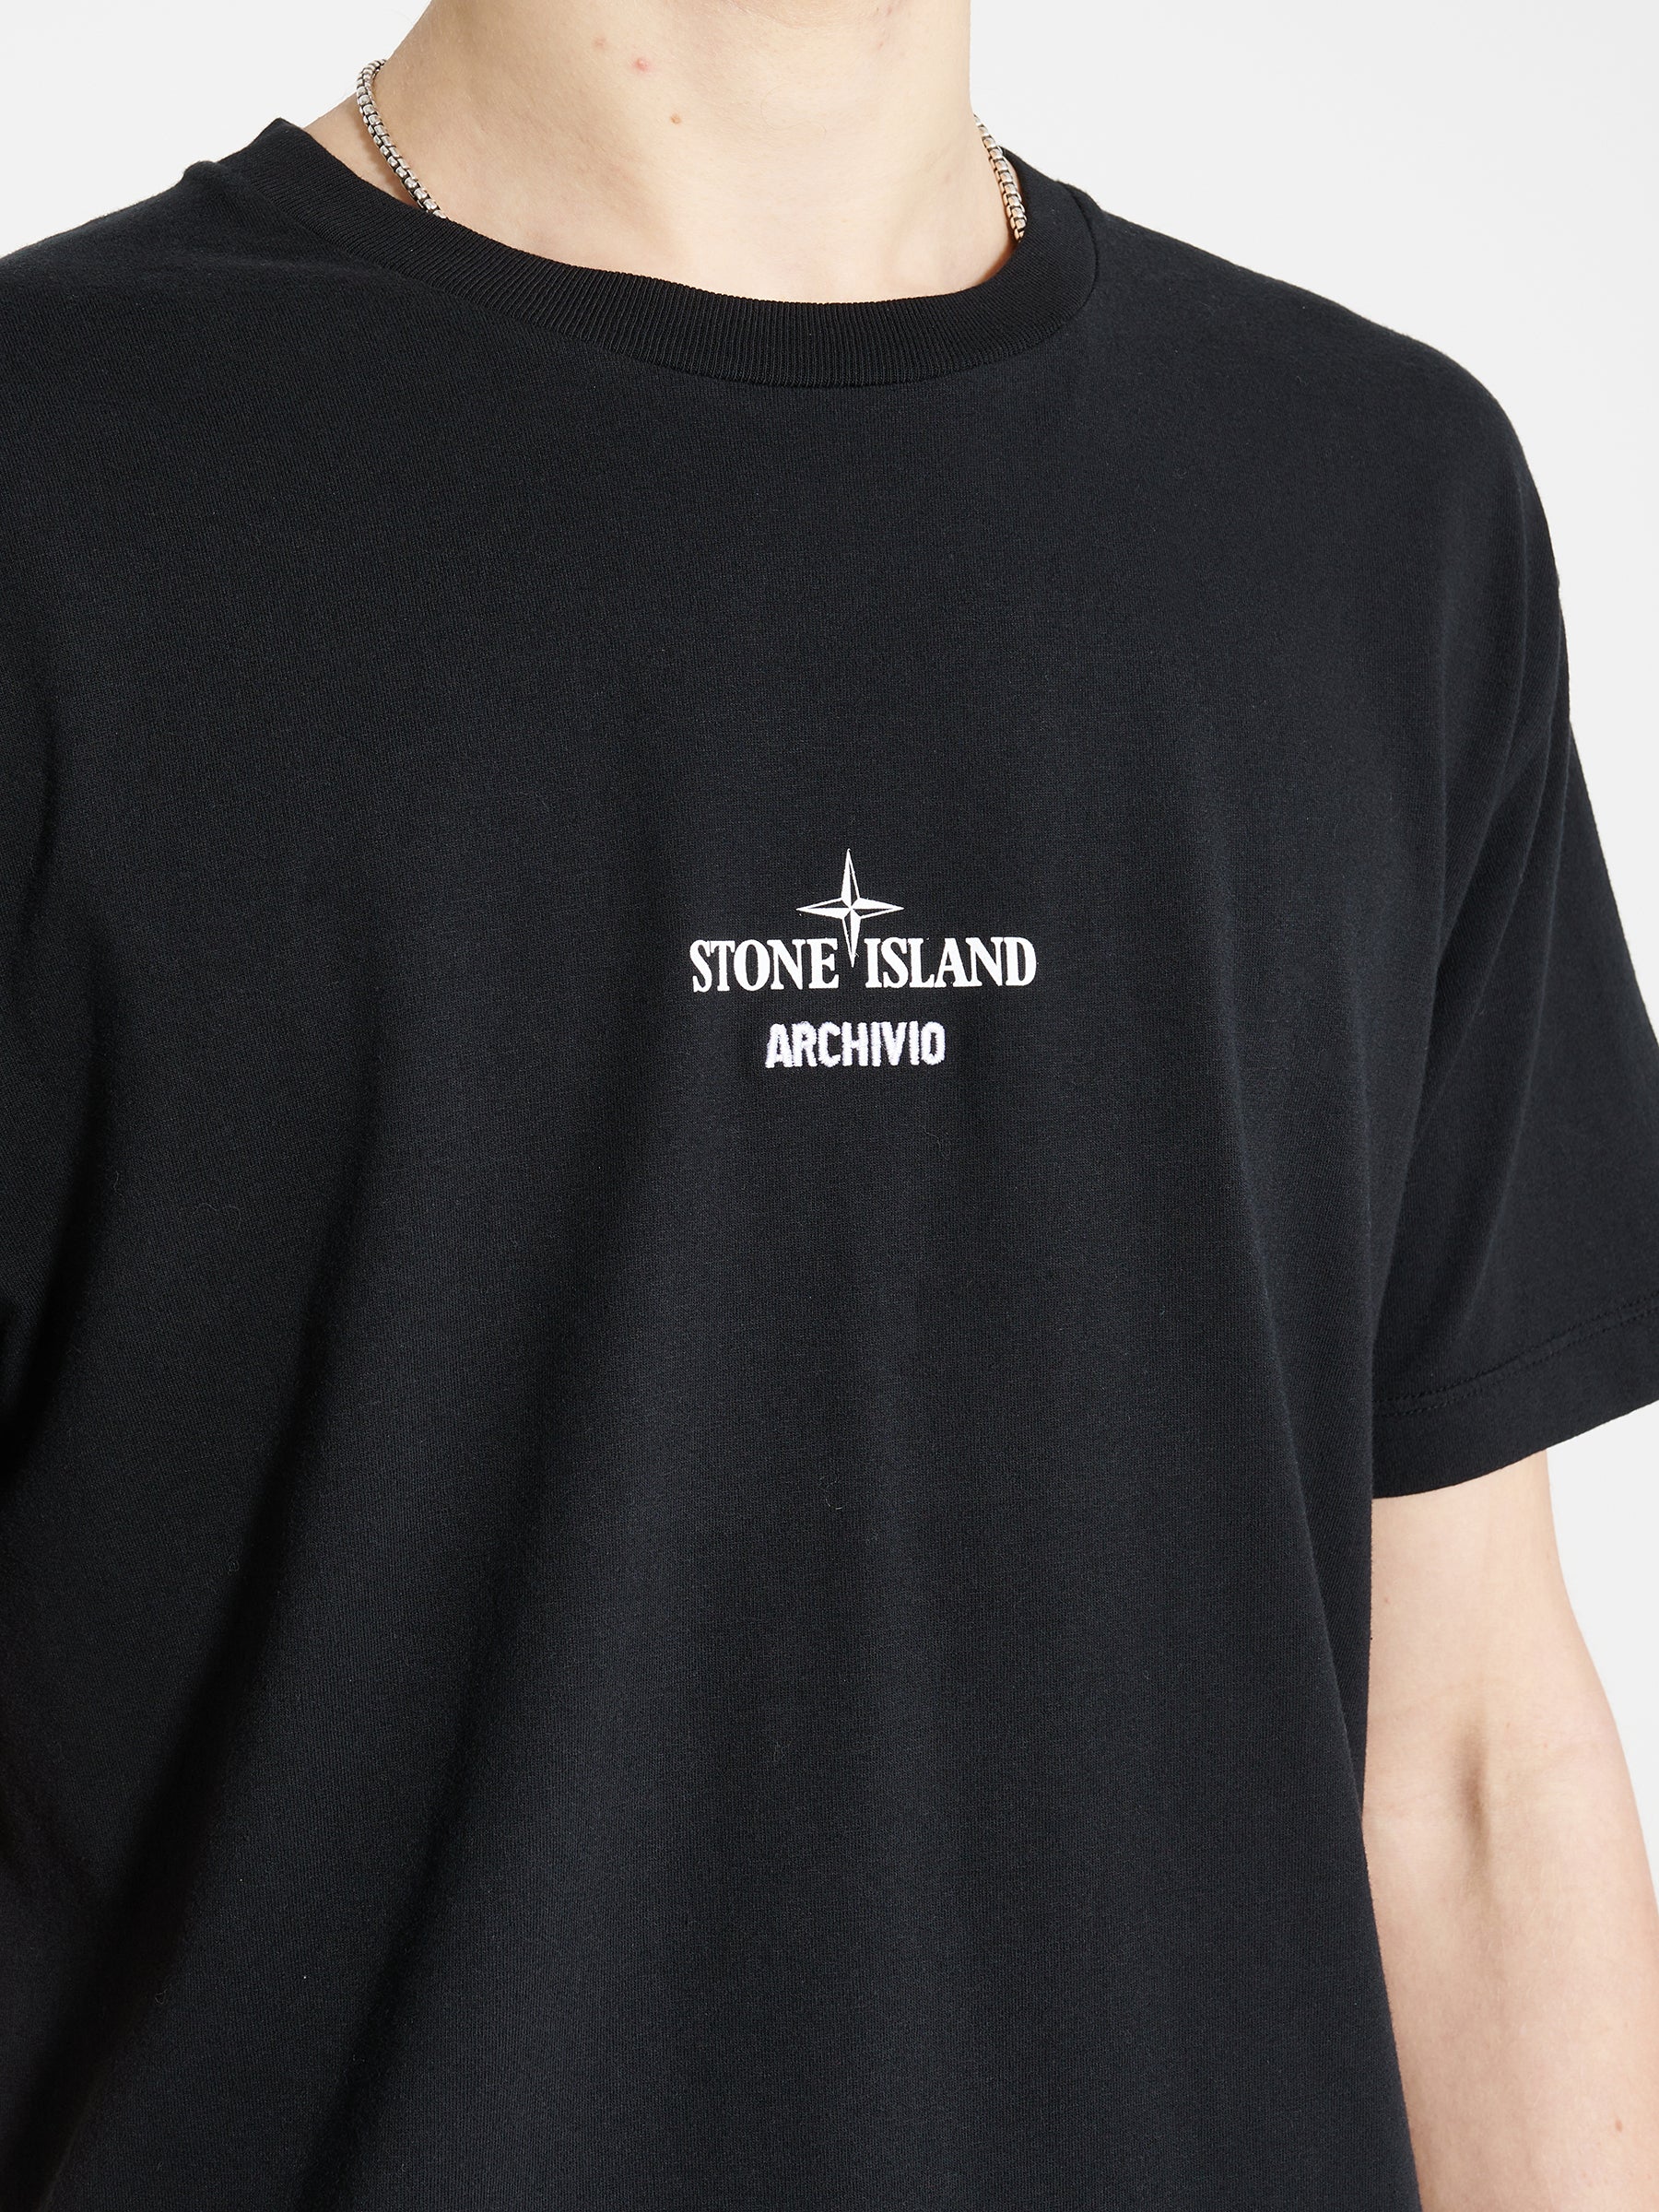 Stone Island Archivio T-shirt Black